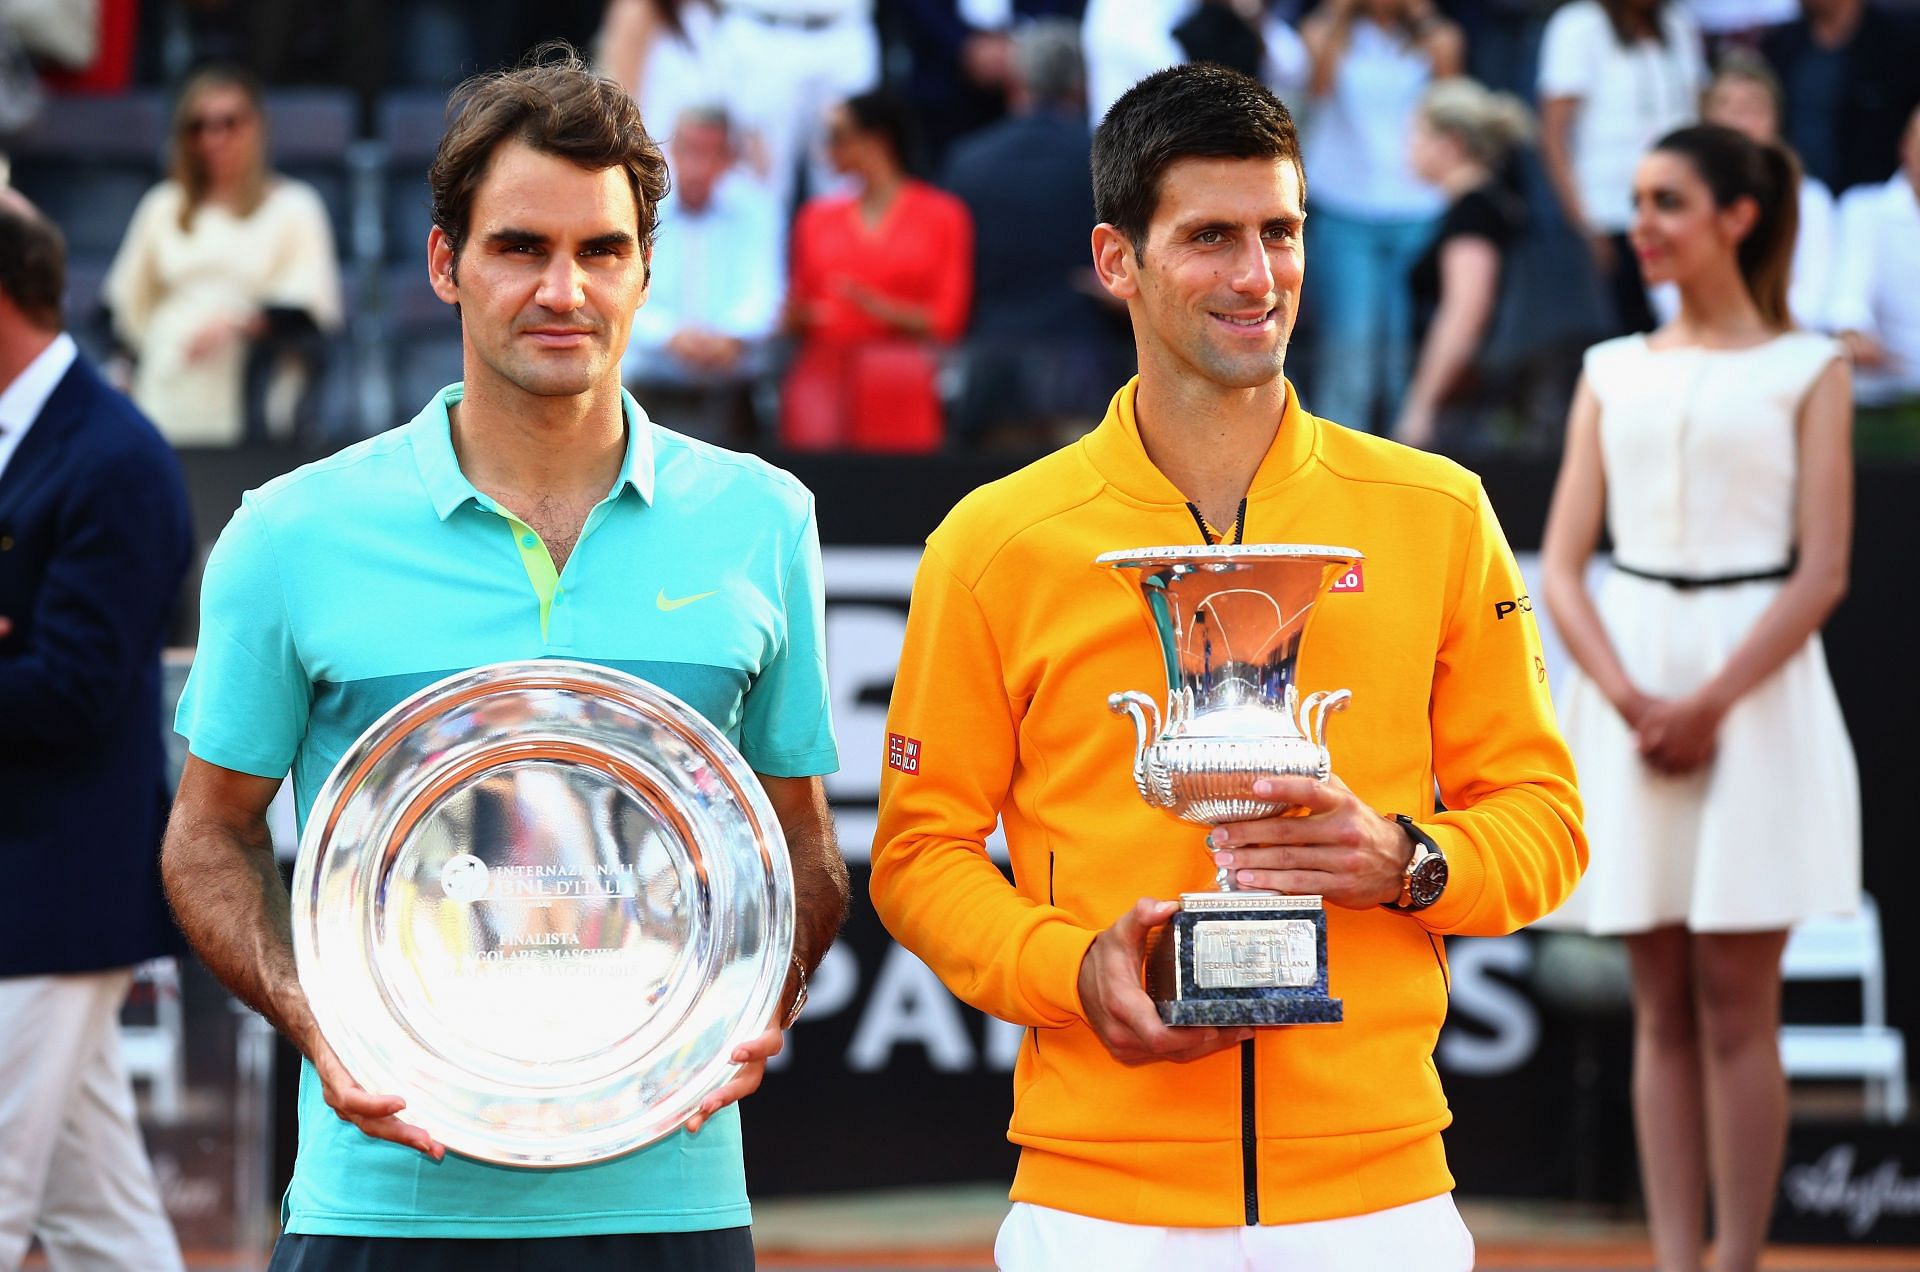 Novak Djokovic beat Roger Federer to win the 2015 Italian Open